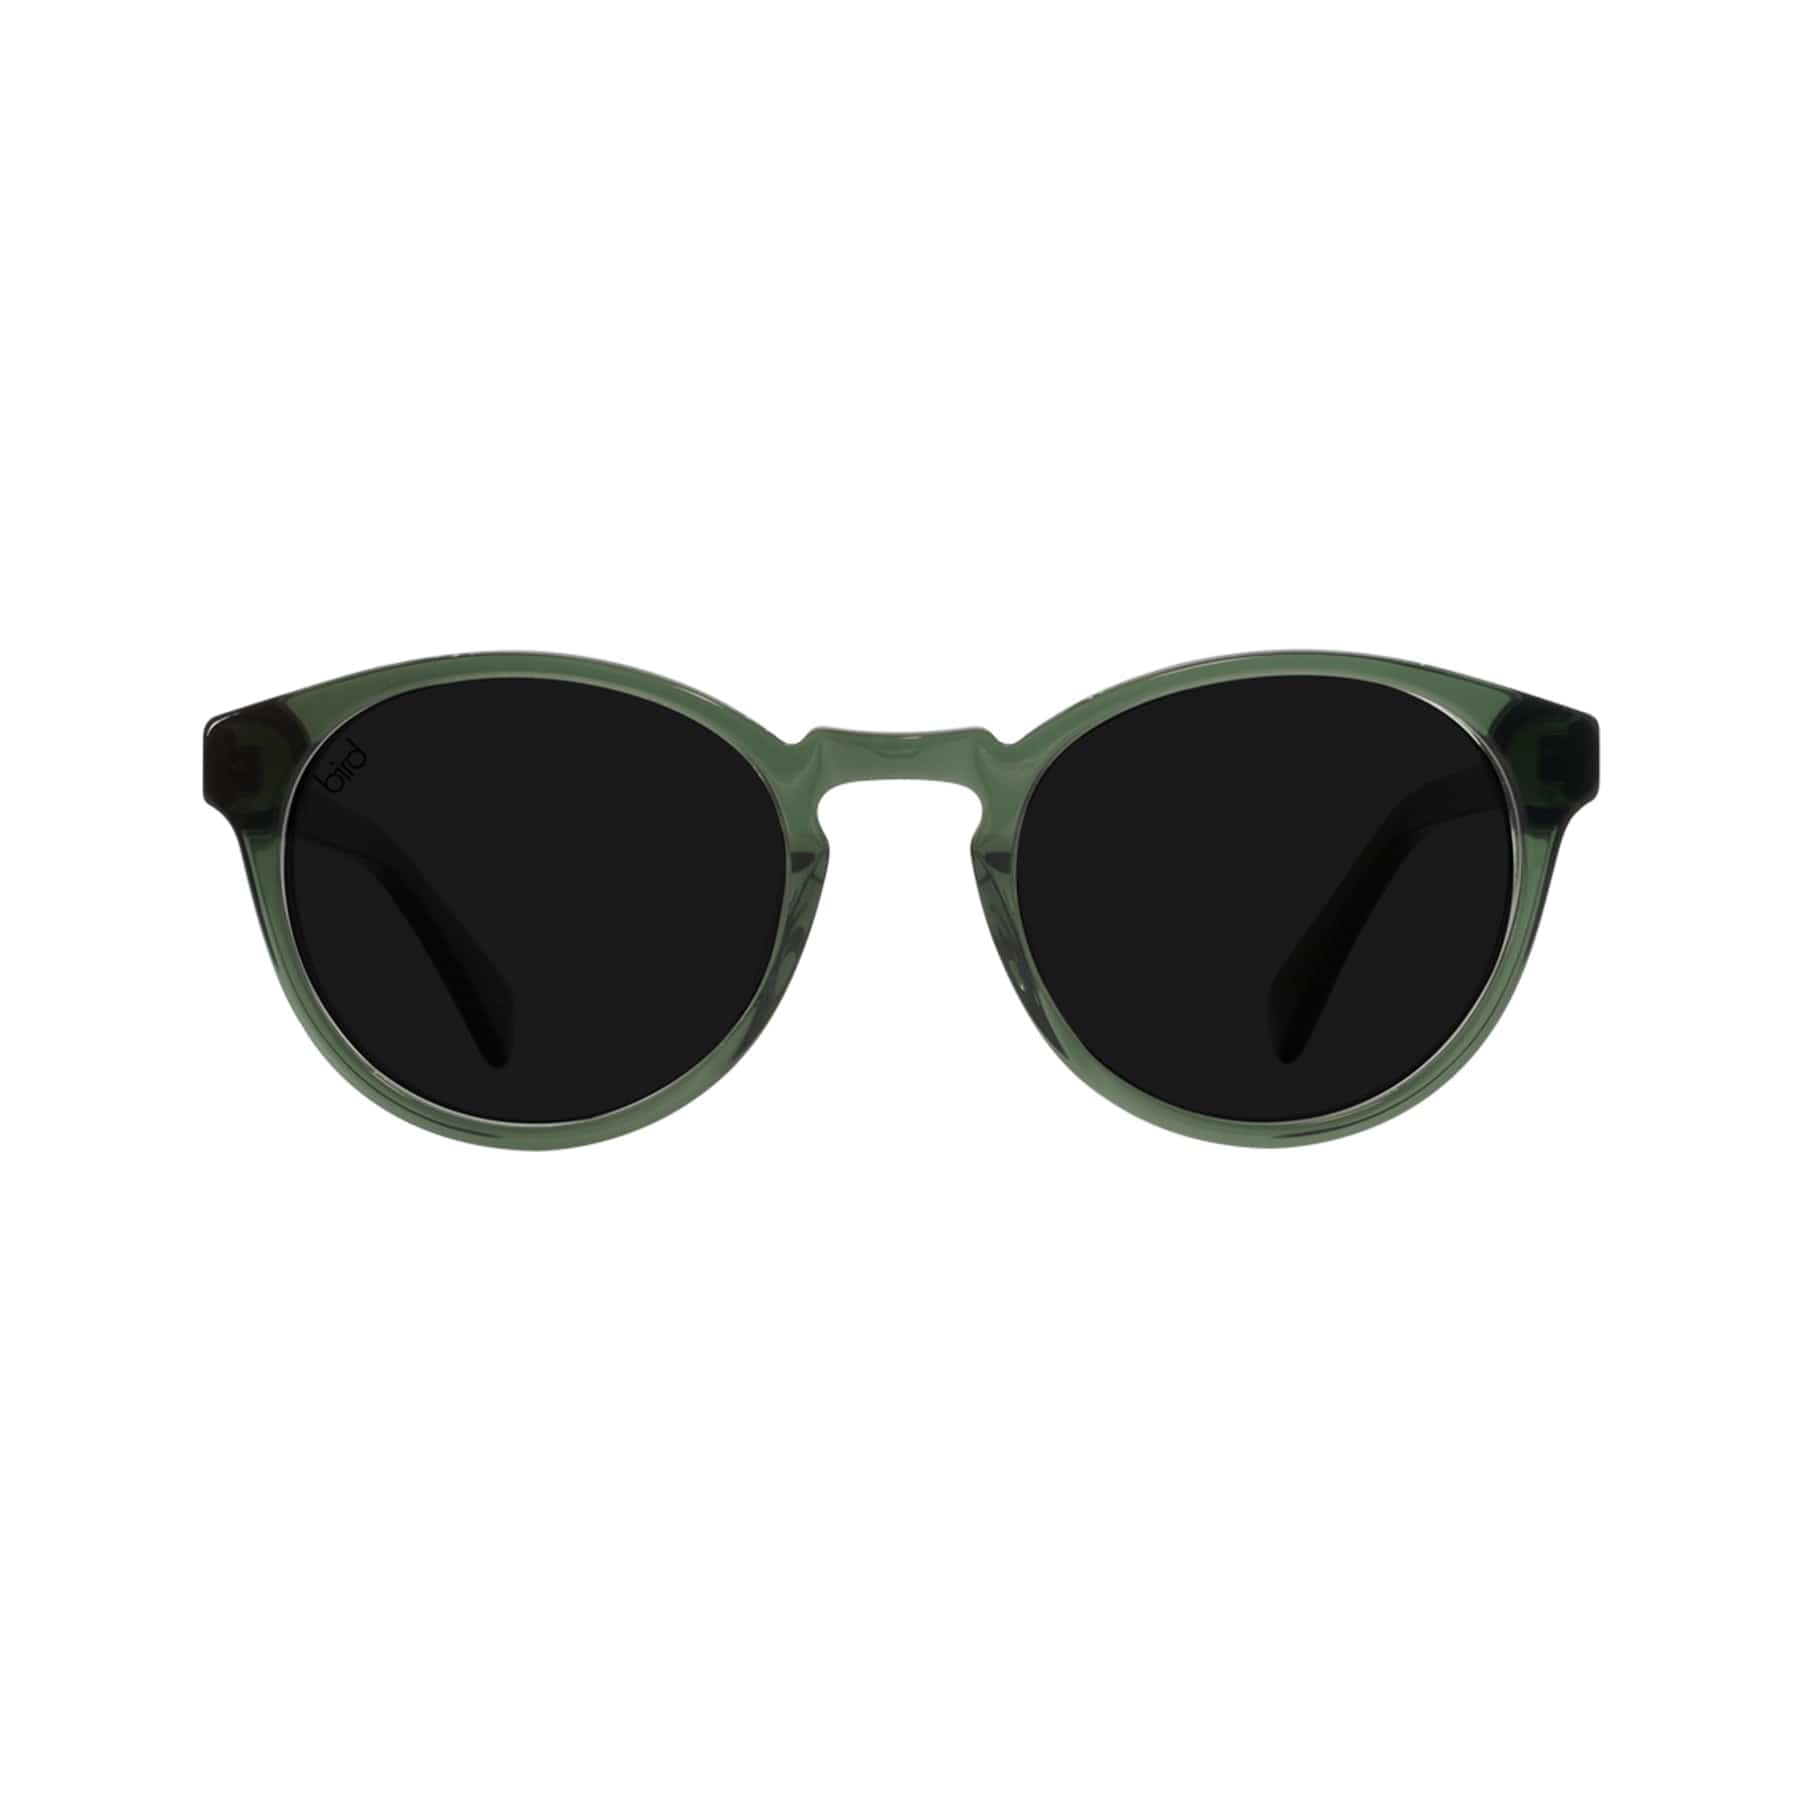 Kaka sunglasses olive